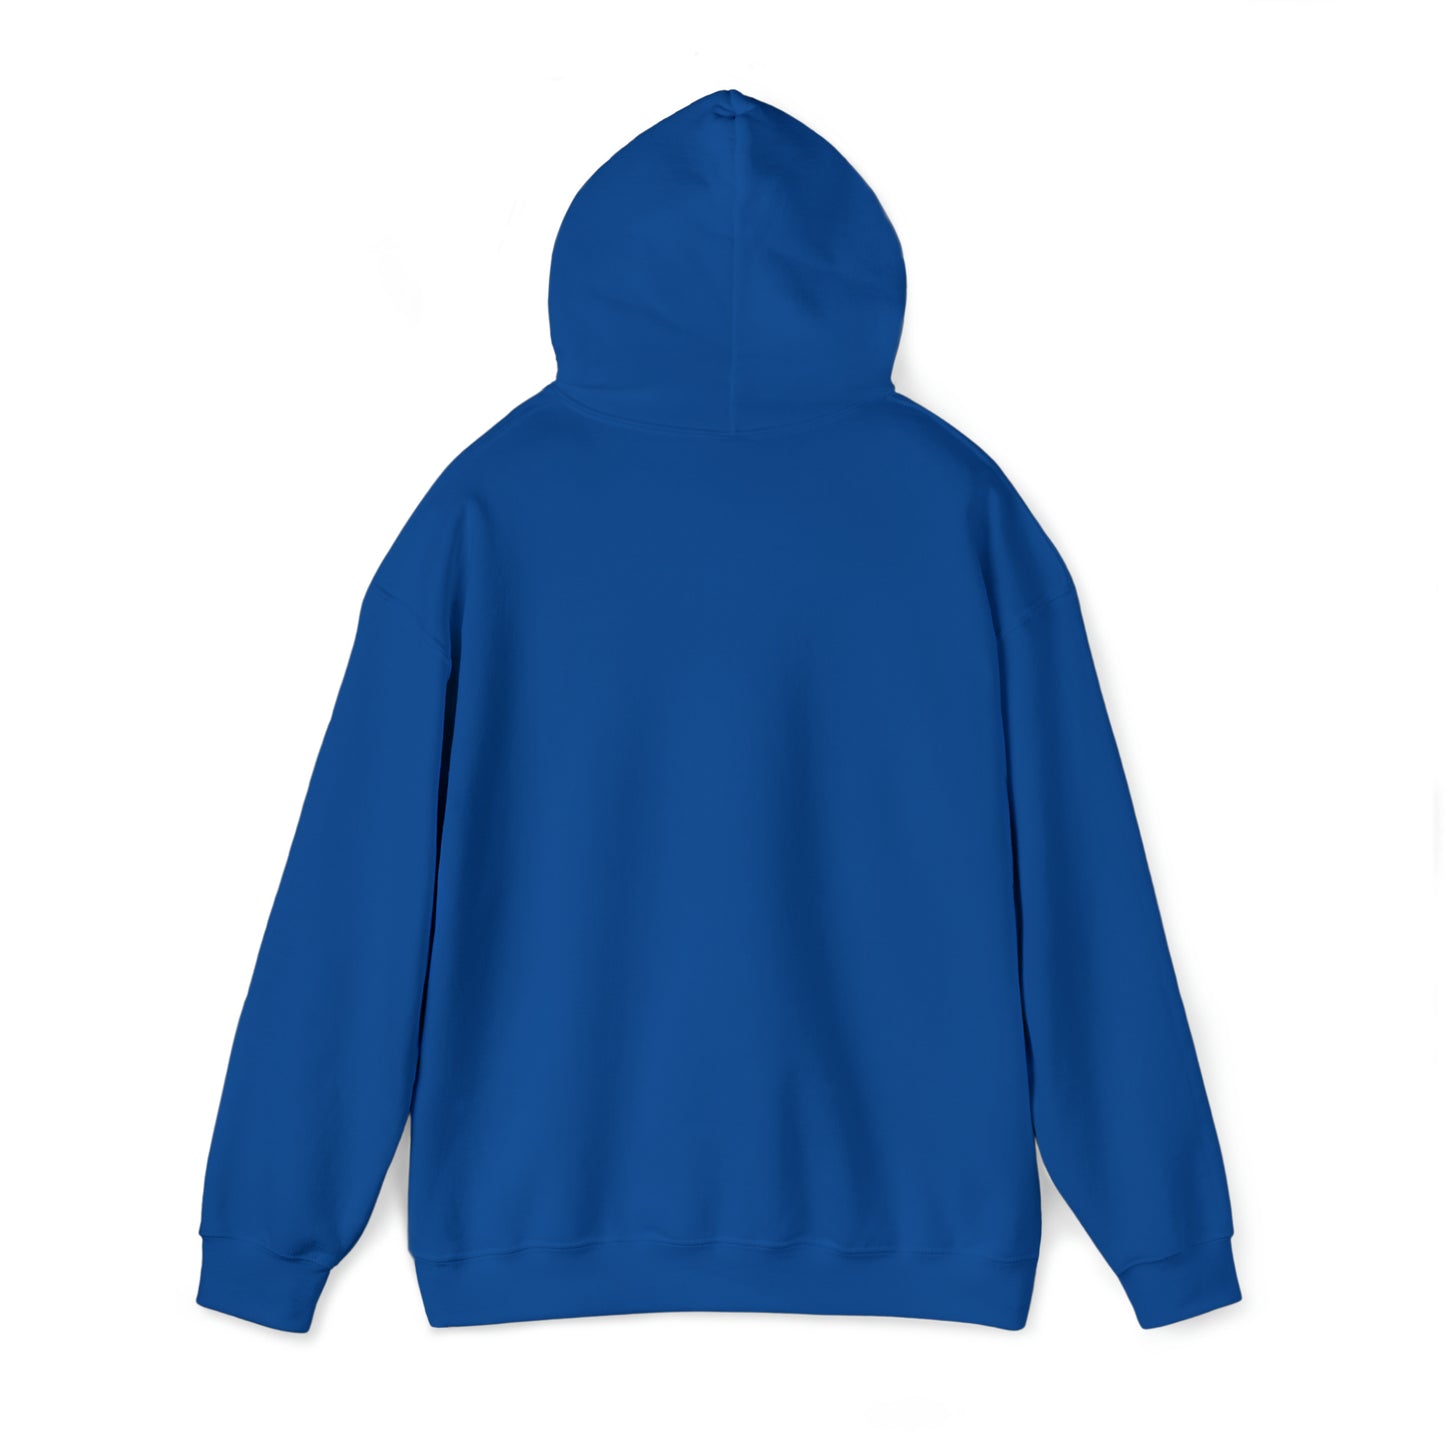 She Is Strong Unisex Heavy Blend™ Hooded Sweatshirt